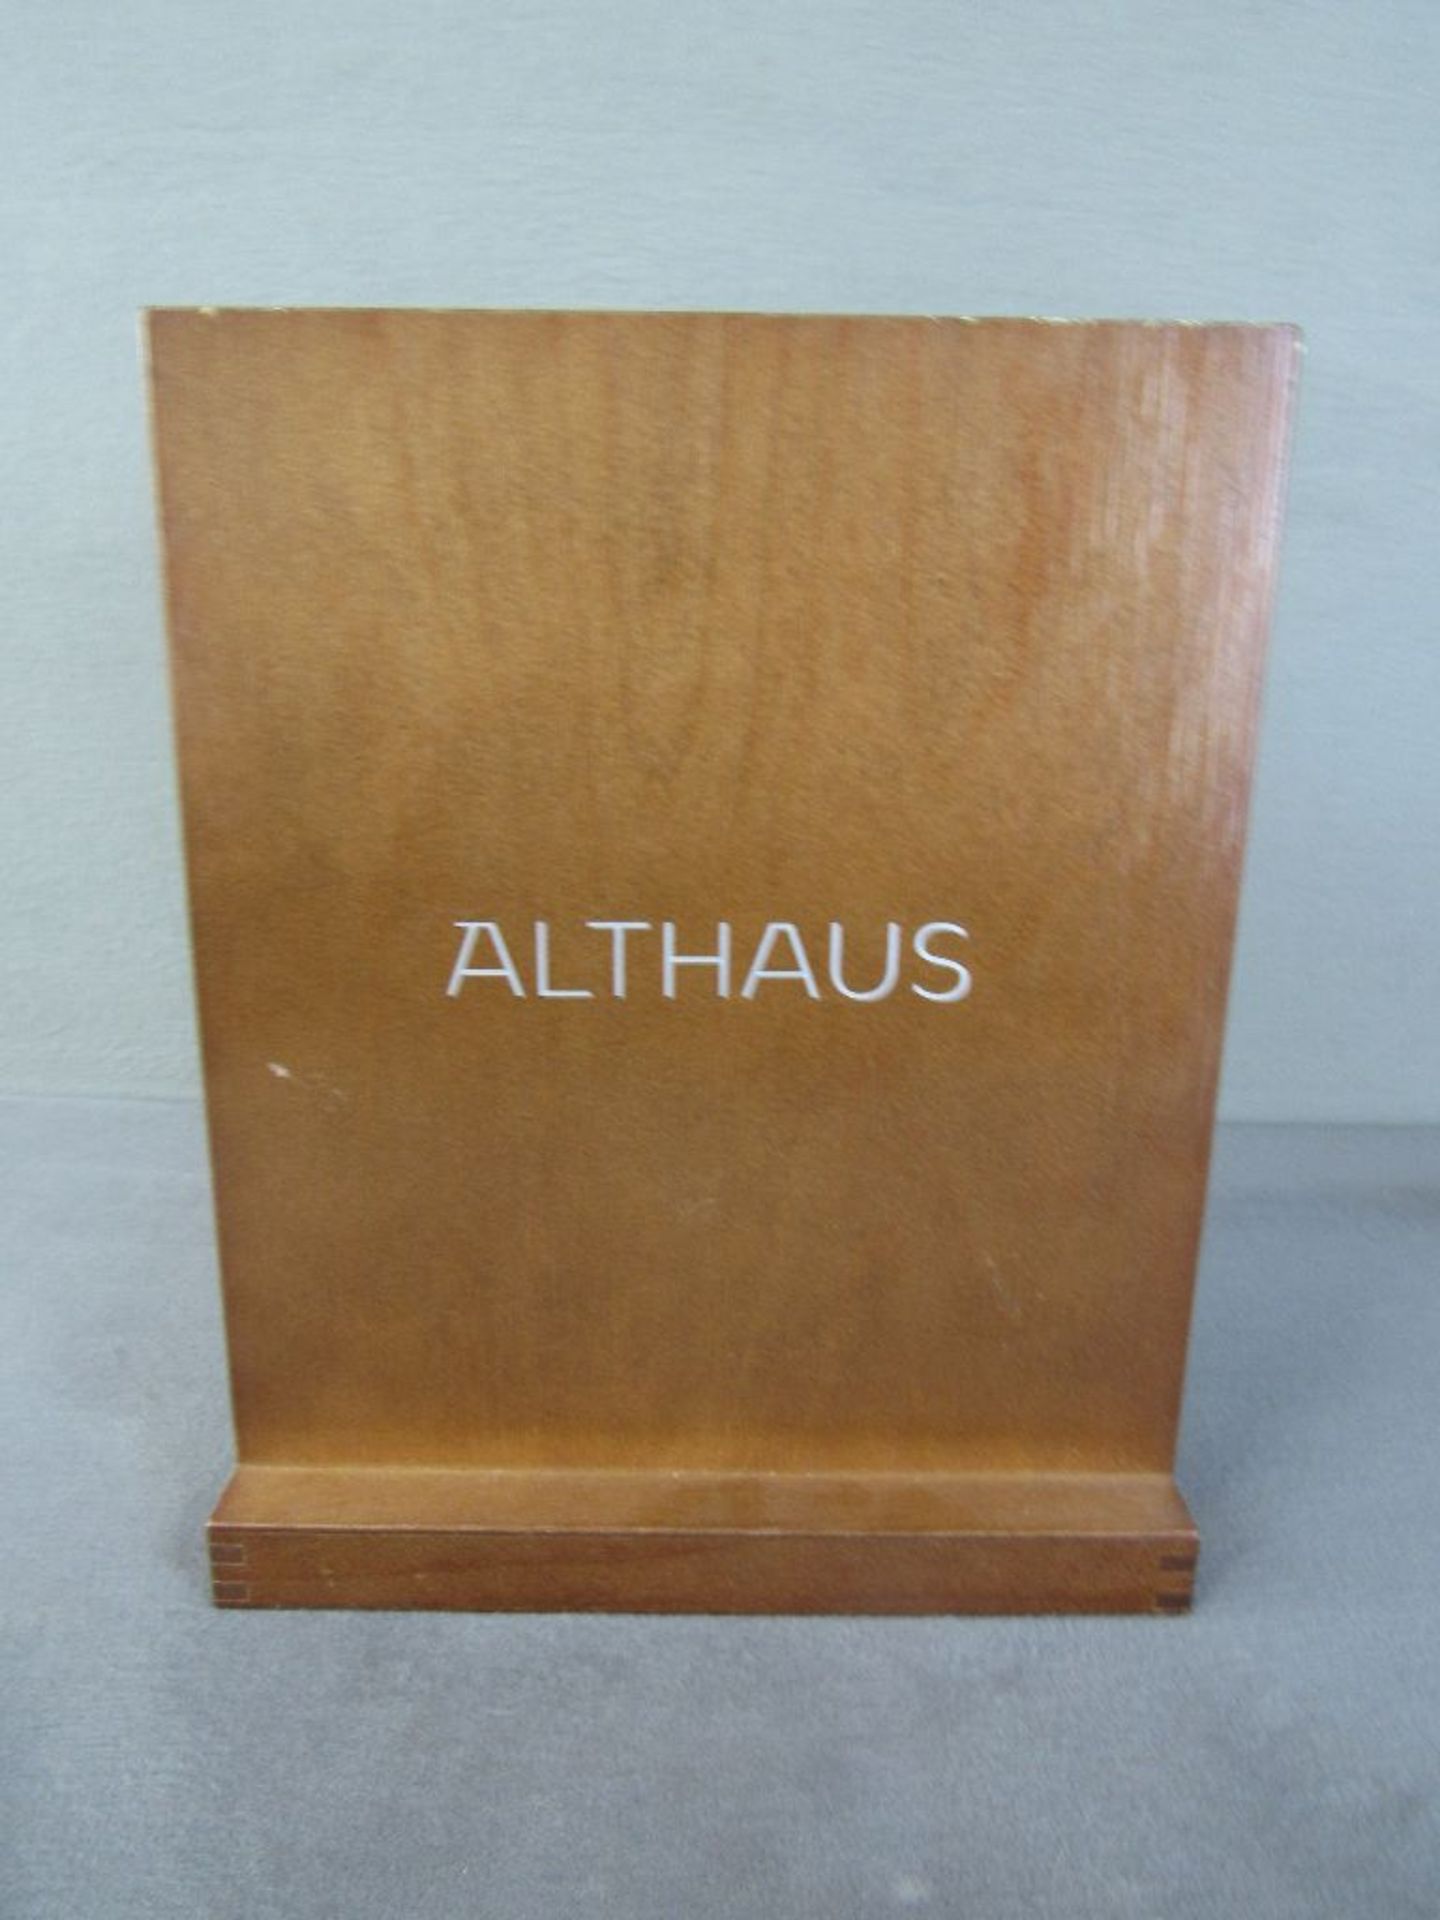 Verkaufsregal Reklame Holz Althaus 35x28cm - Image 4 of 4